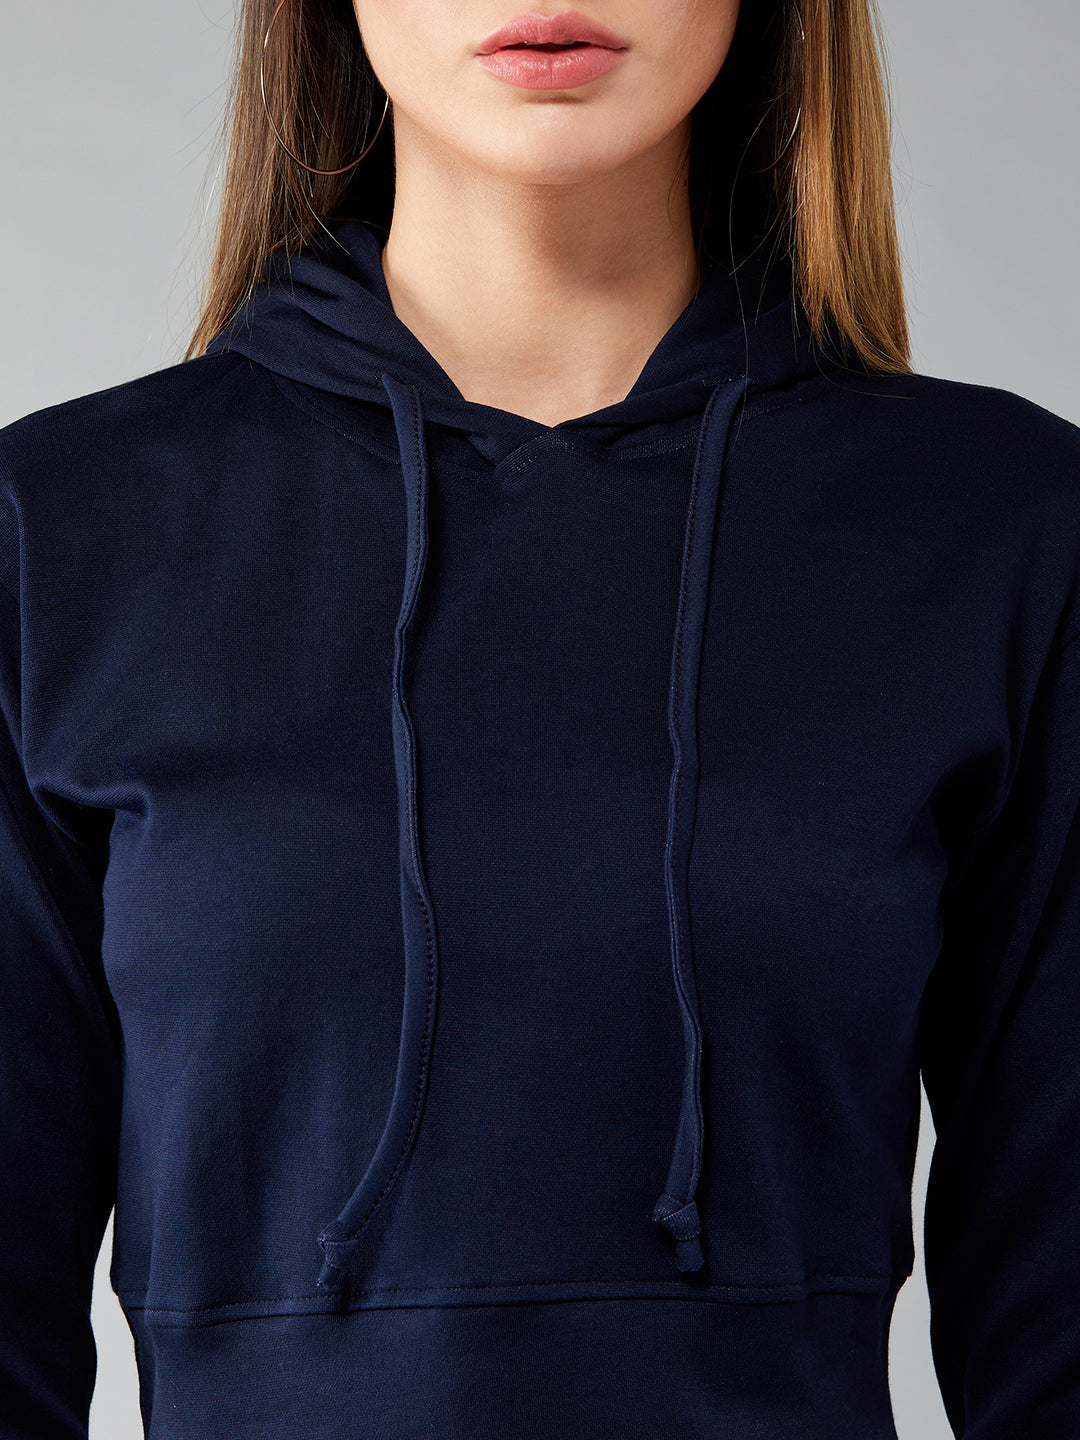 Women's Navy Blue Solid Round Neck Full Sleeve Hooded Boxy Crop Sweatshirt